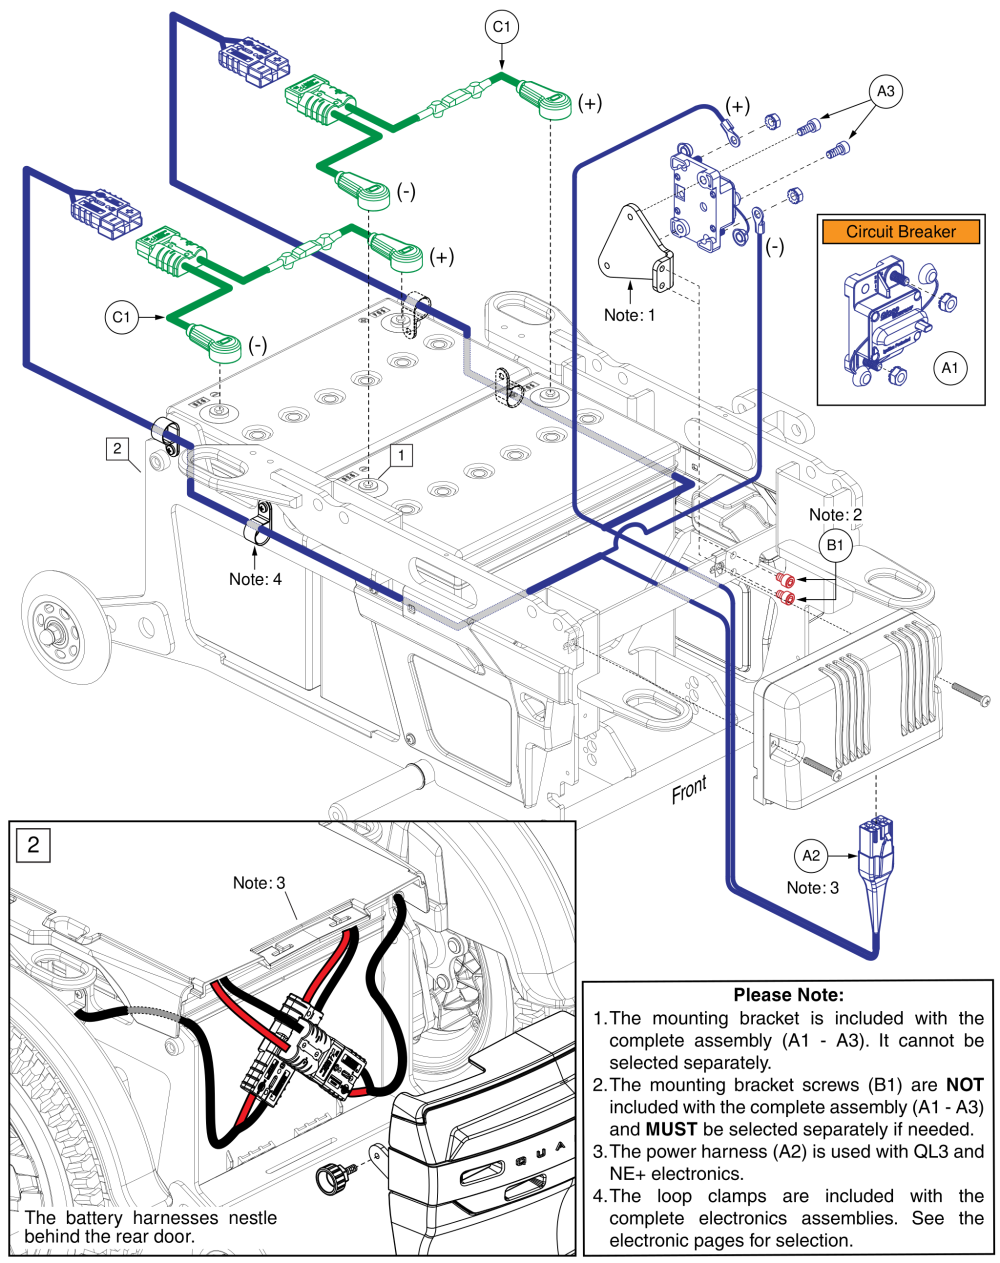 Circuit Breaker And Power Harnesses, R-trak parts diagram